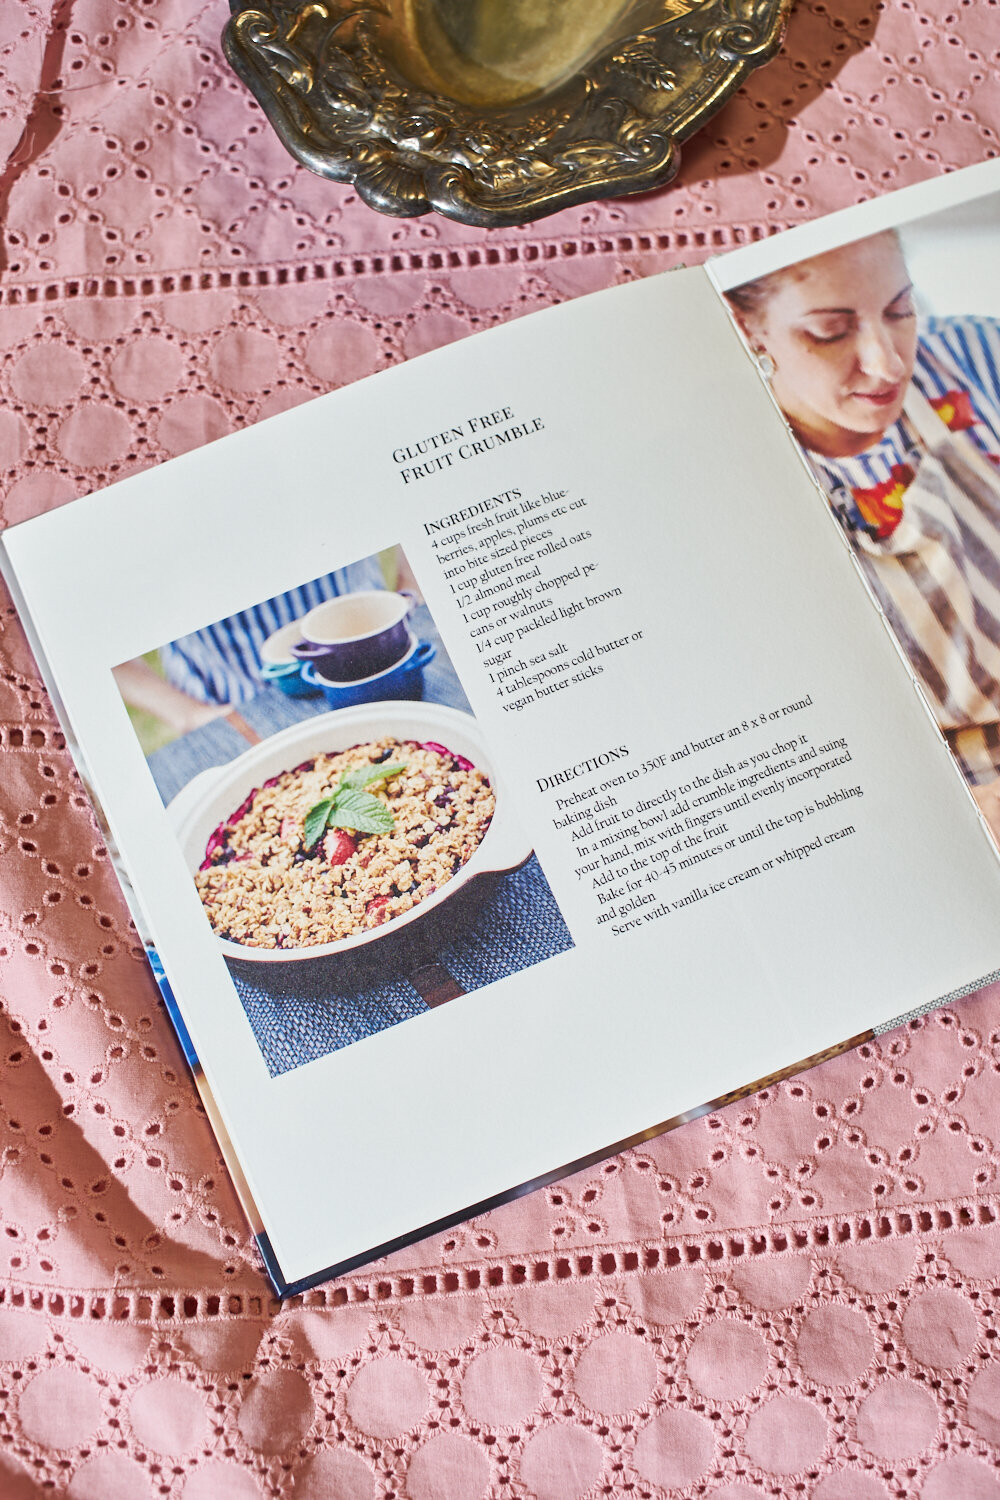 How to Make a Cookbook or DIY Recipe Book